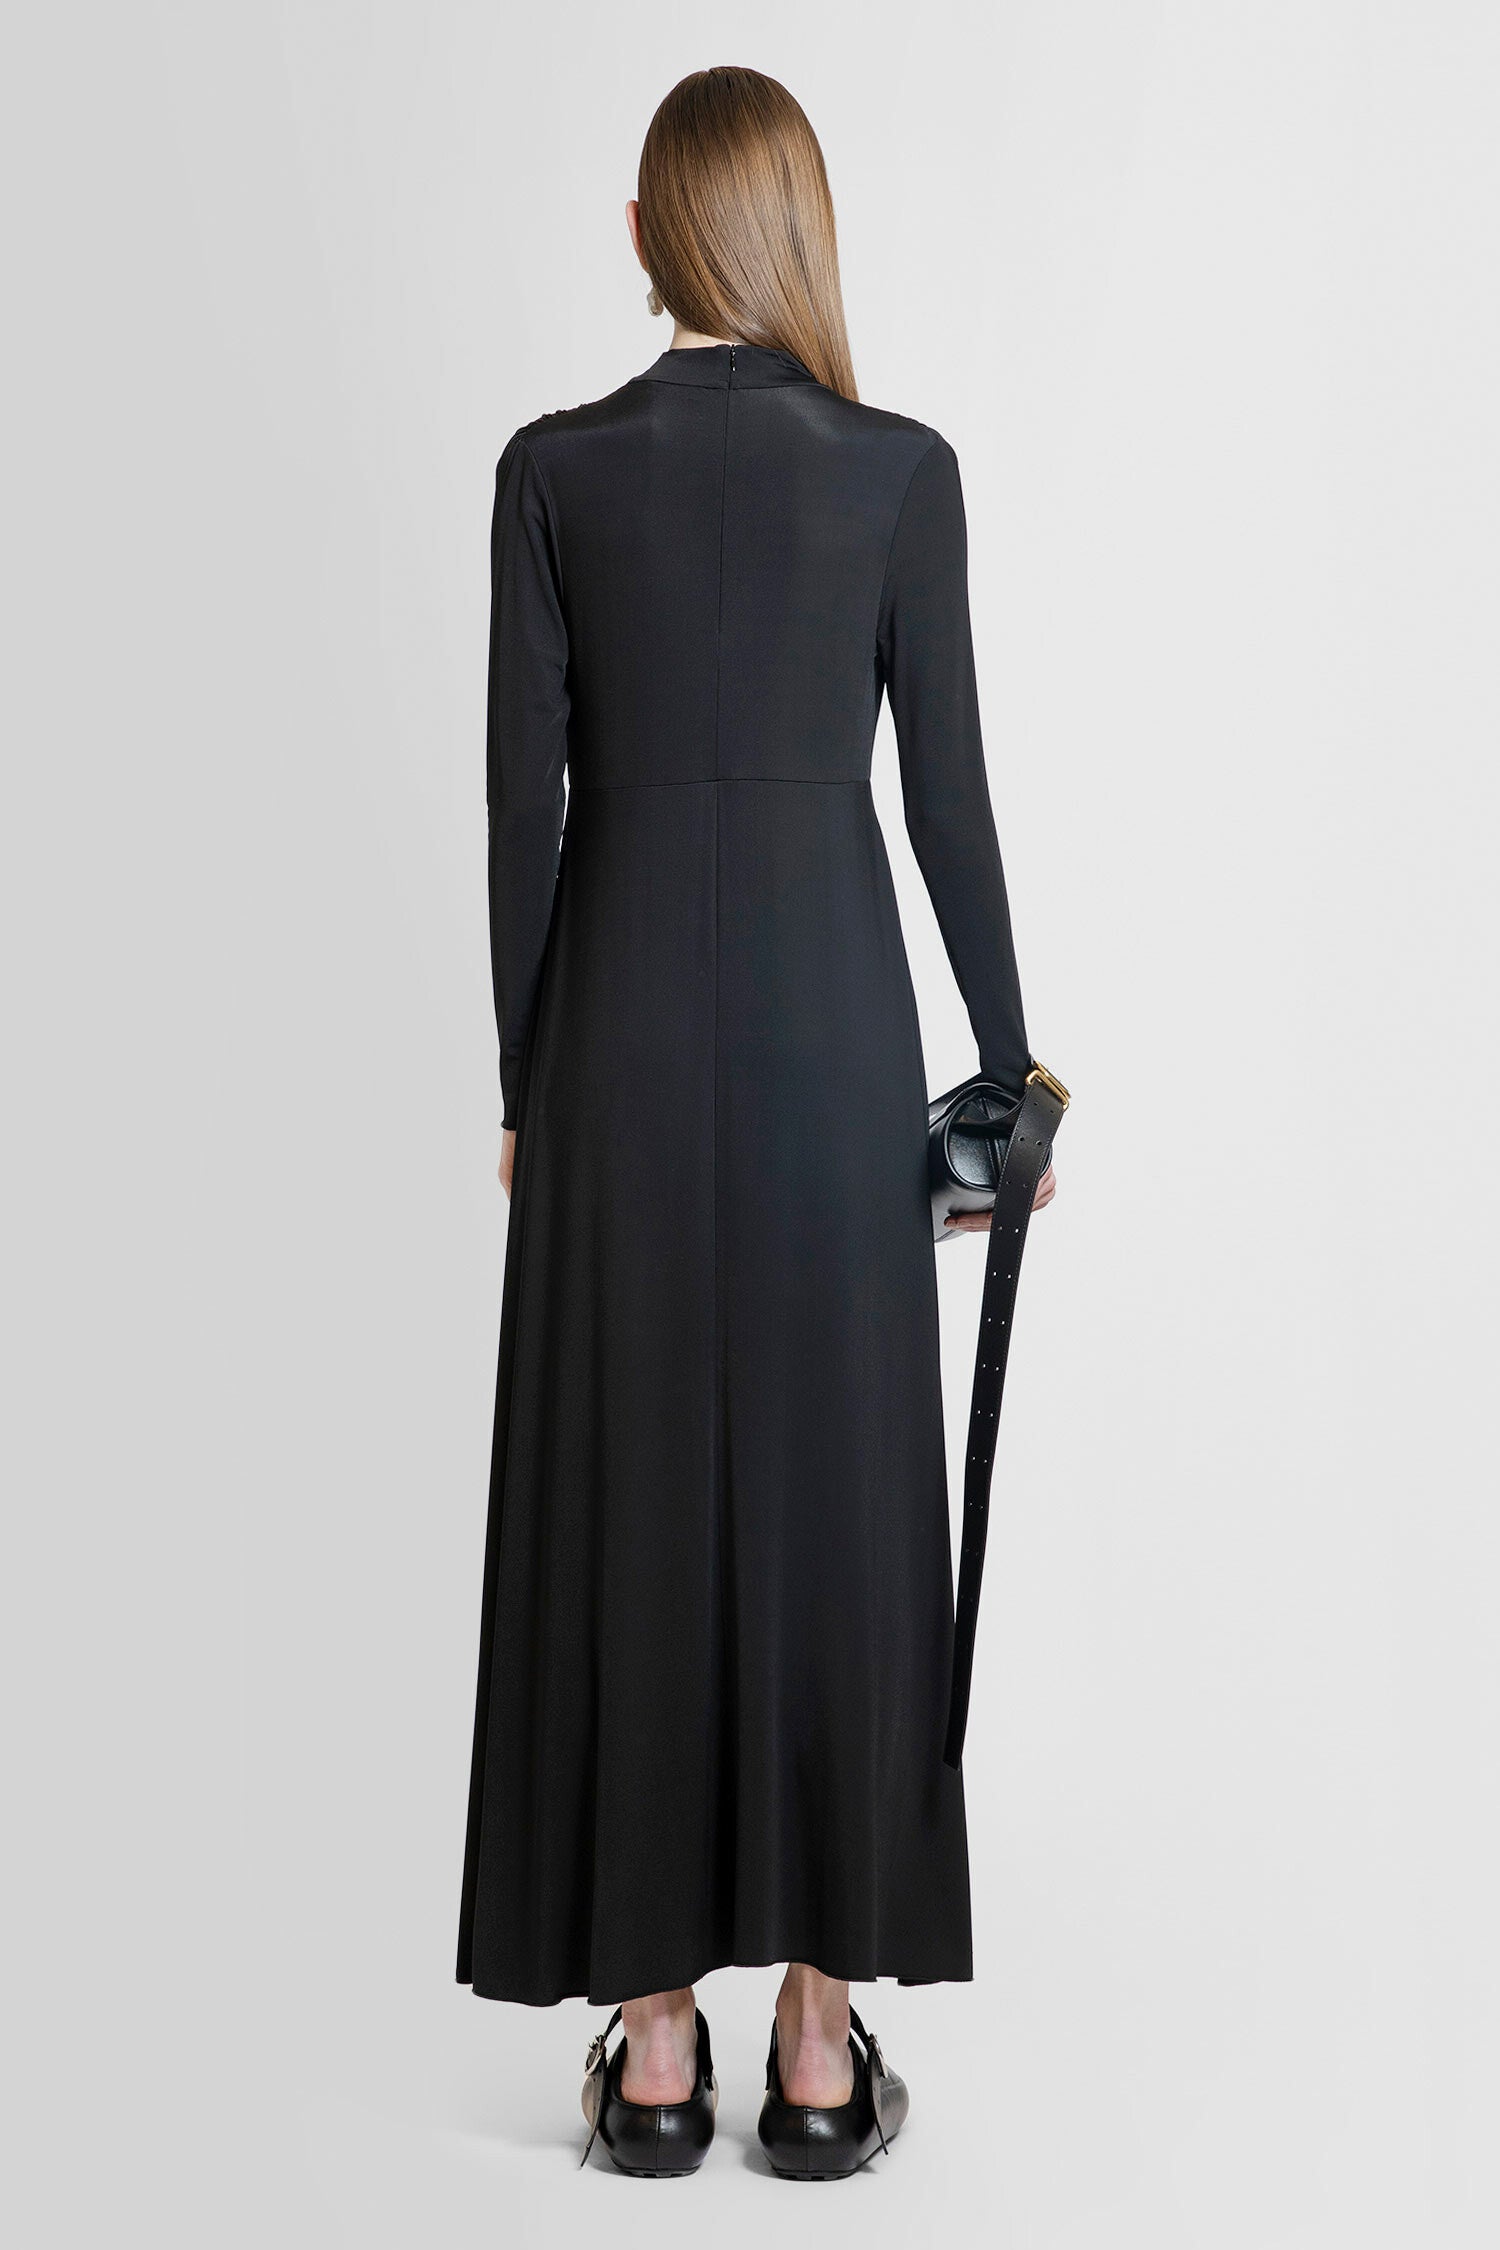 JIL SANDER WOMAN BLACK DRESSES